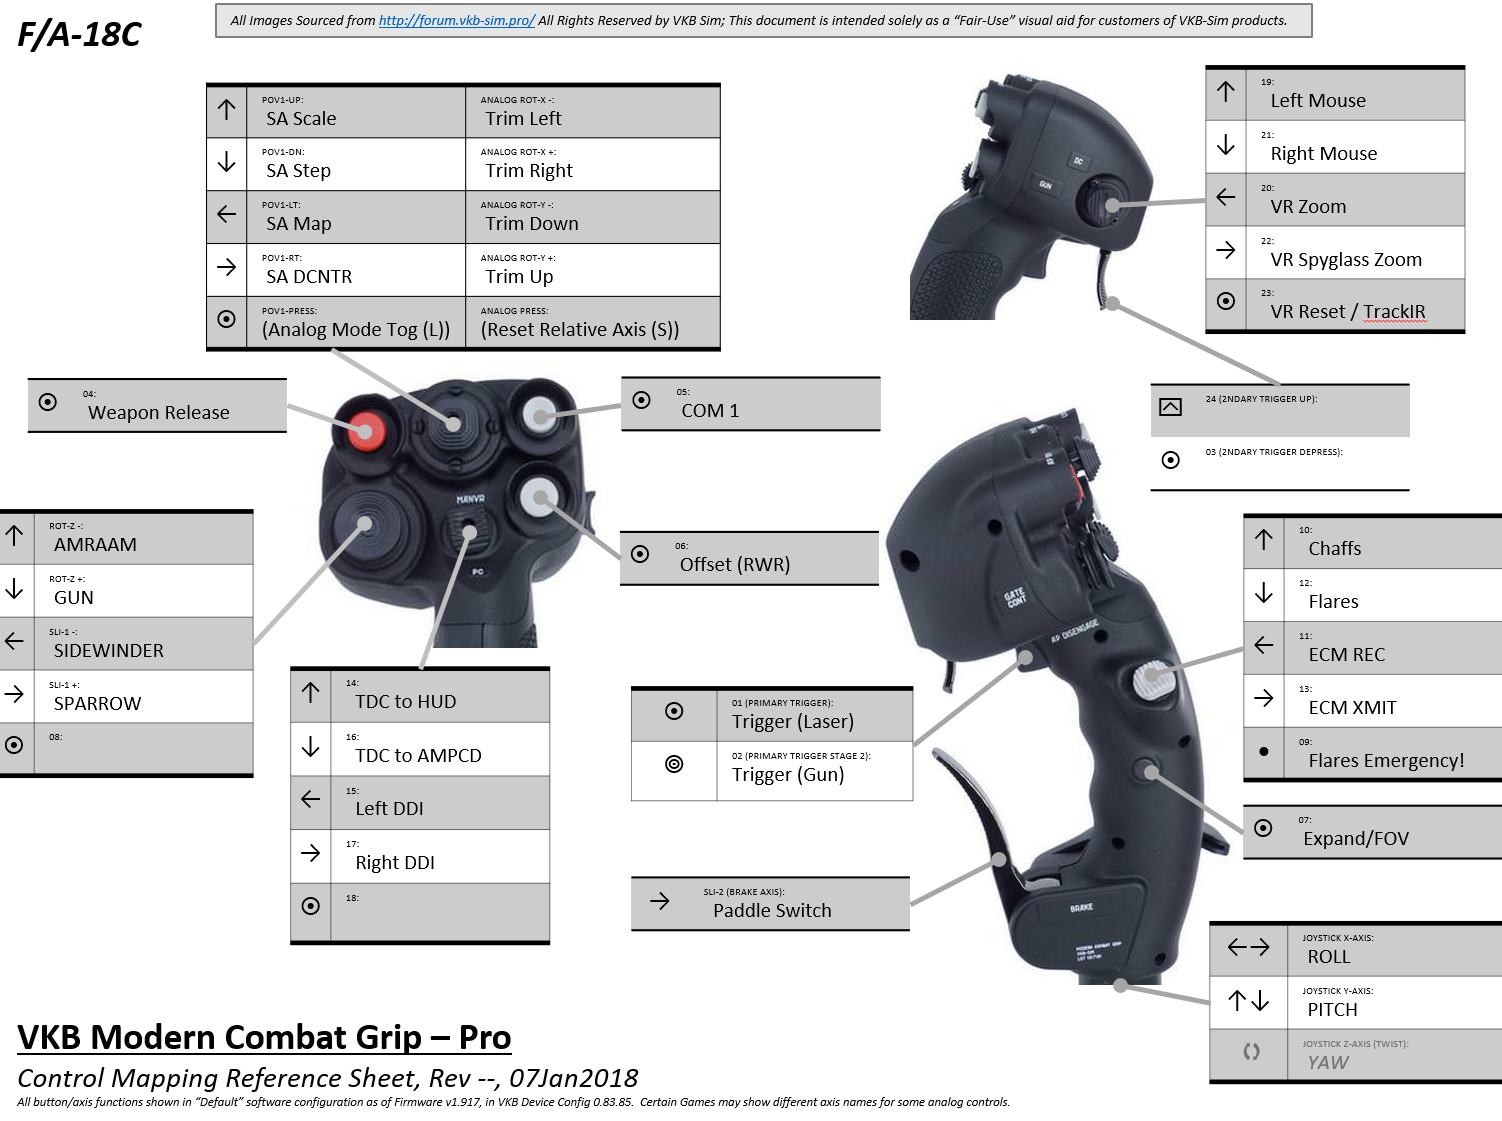 Profile VKB Modern Combat Grip Pro (MCG Pro) & Warthog Throttle for F/A-18C